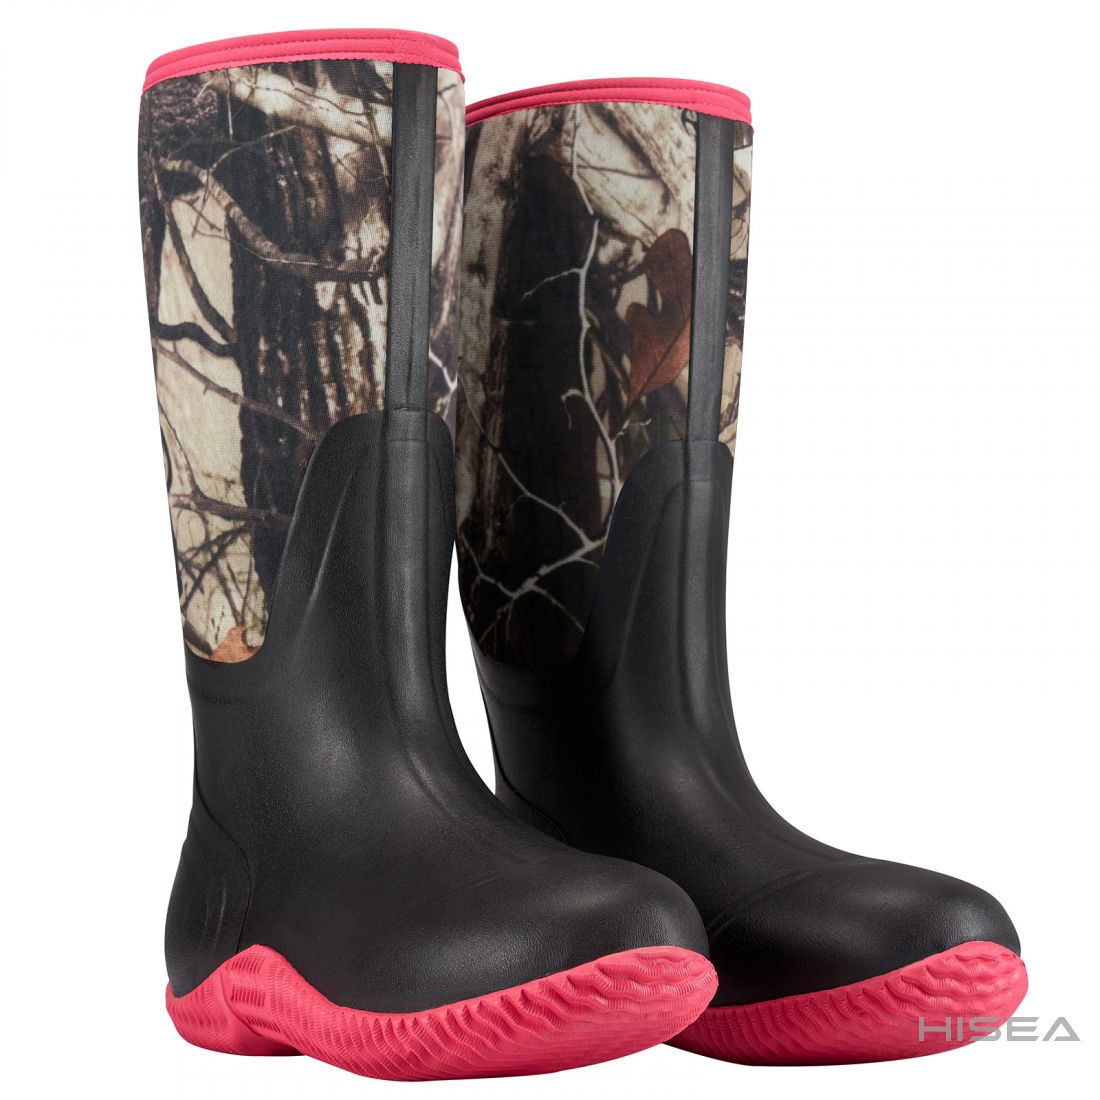 AquaX Women's Rubber Rain Boots